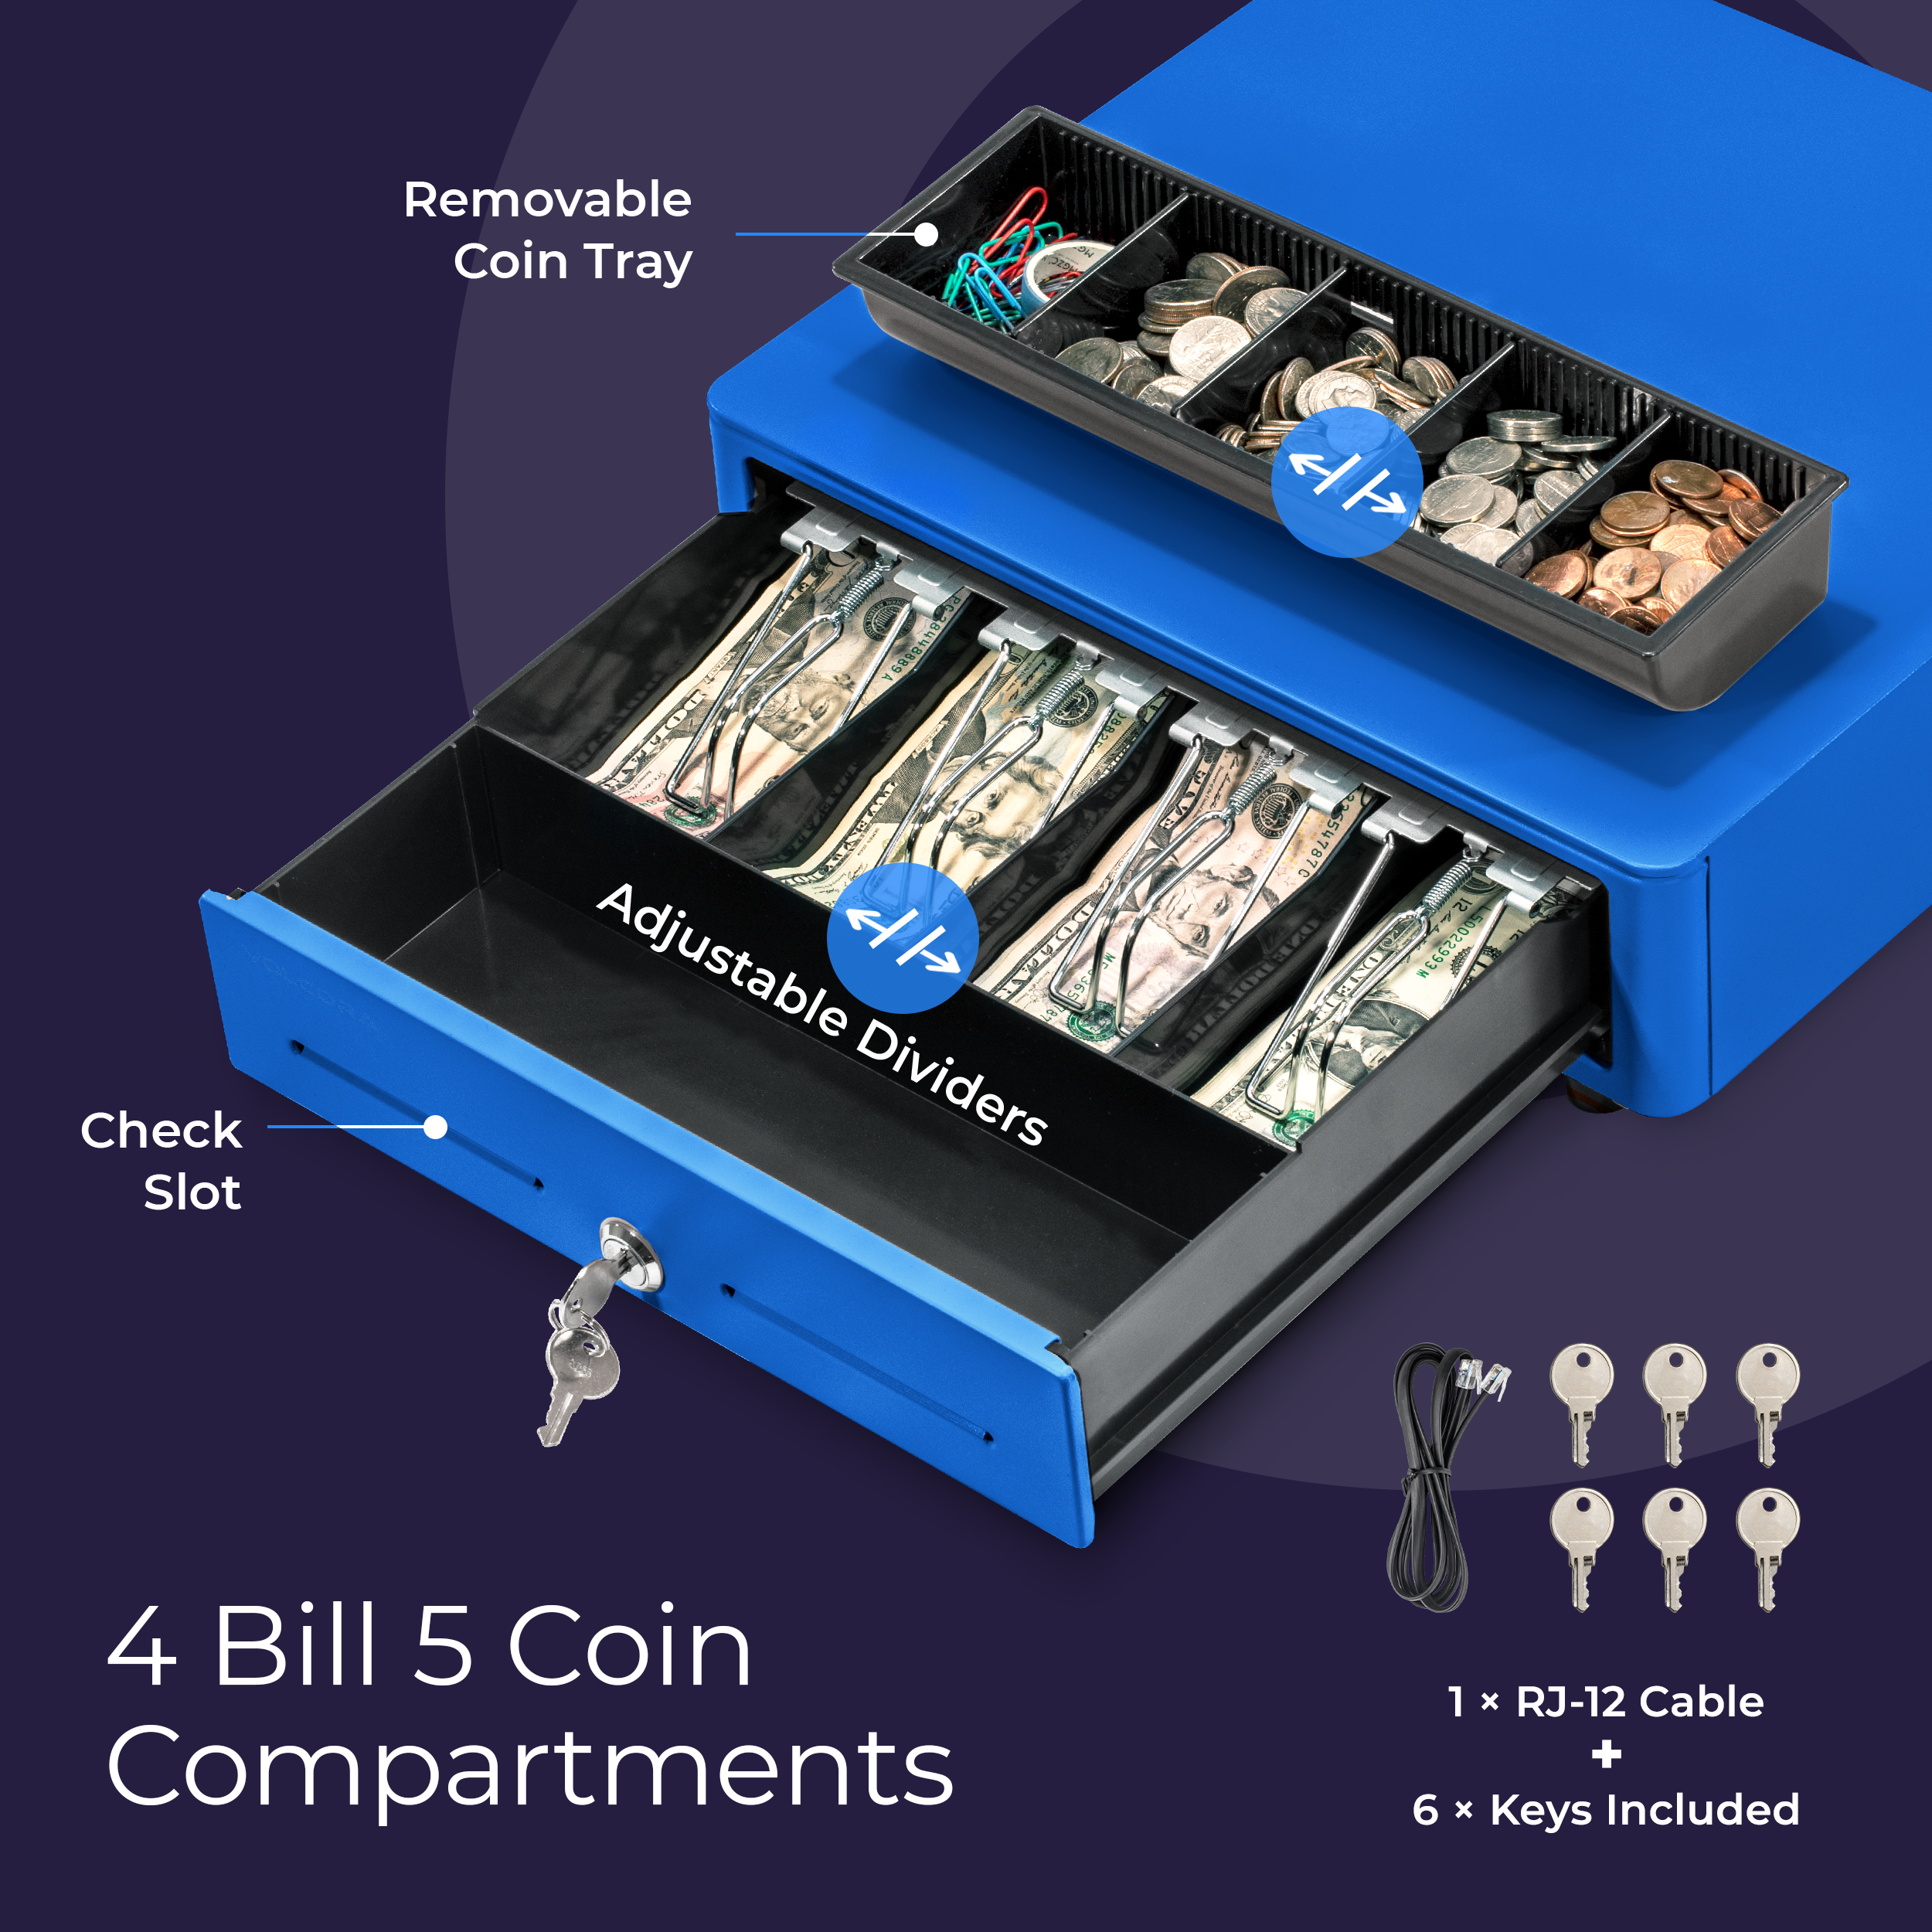 Mini caja registradora de 13 pulgadas, cajón de esquina redondeada, 4 billetes, 5 monedas, apertura automática